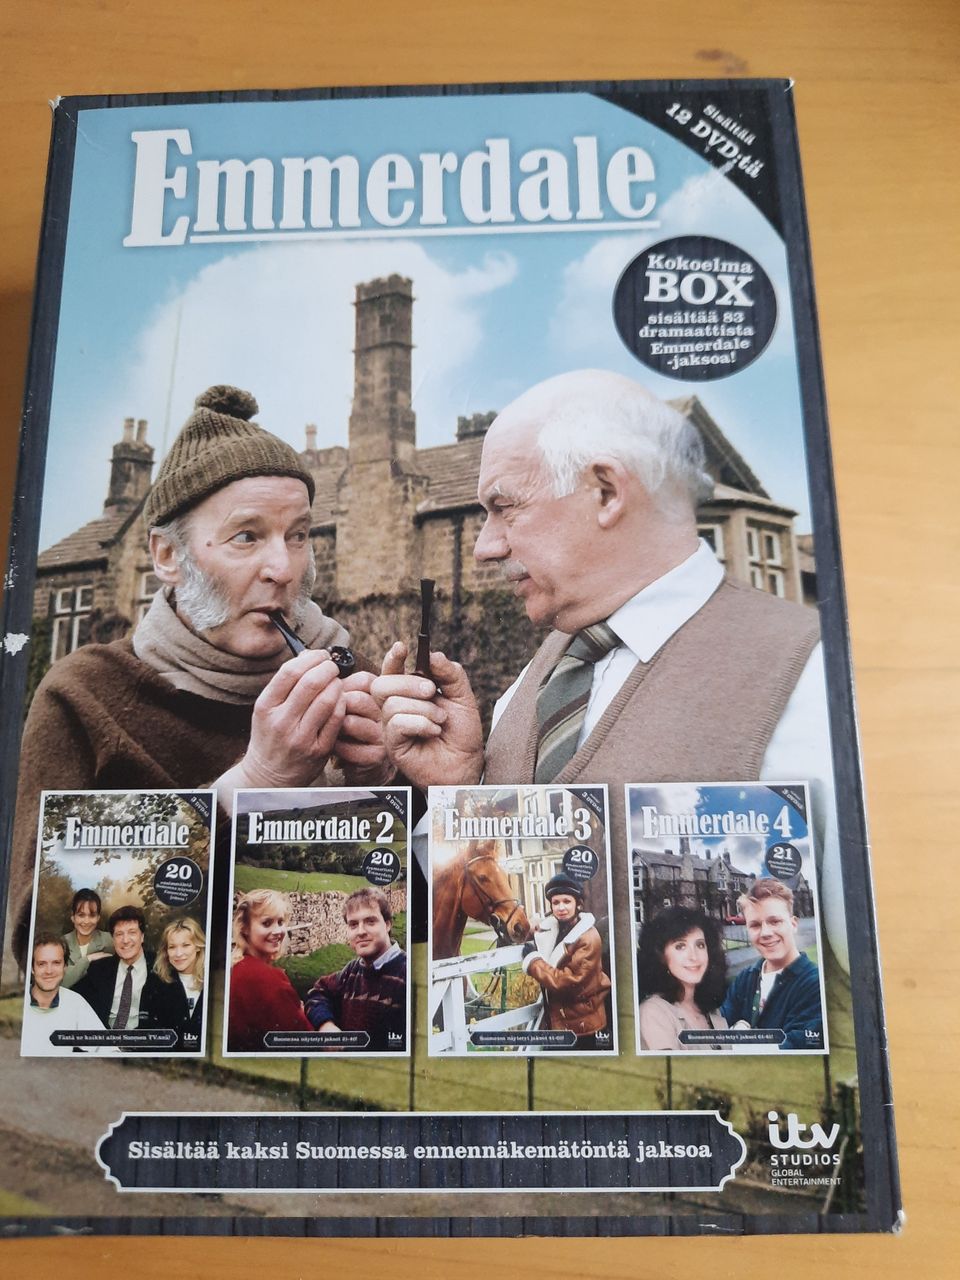 Emmerdale 1-4 box, dvd